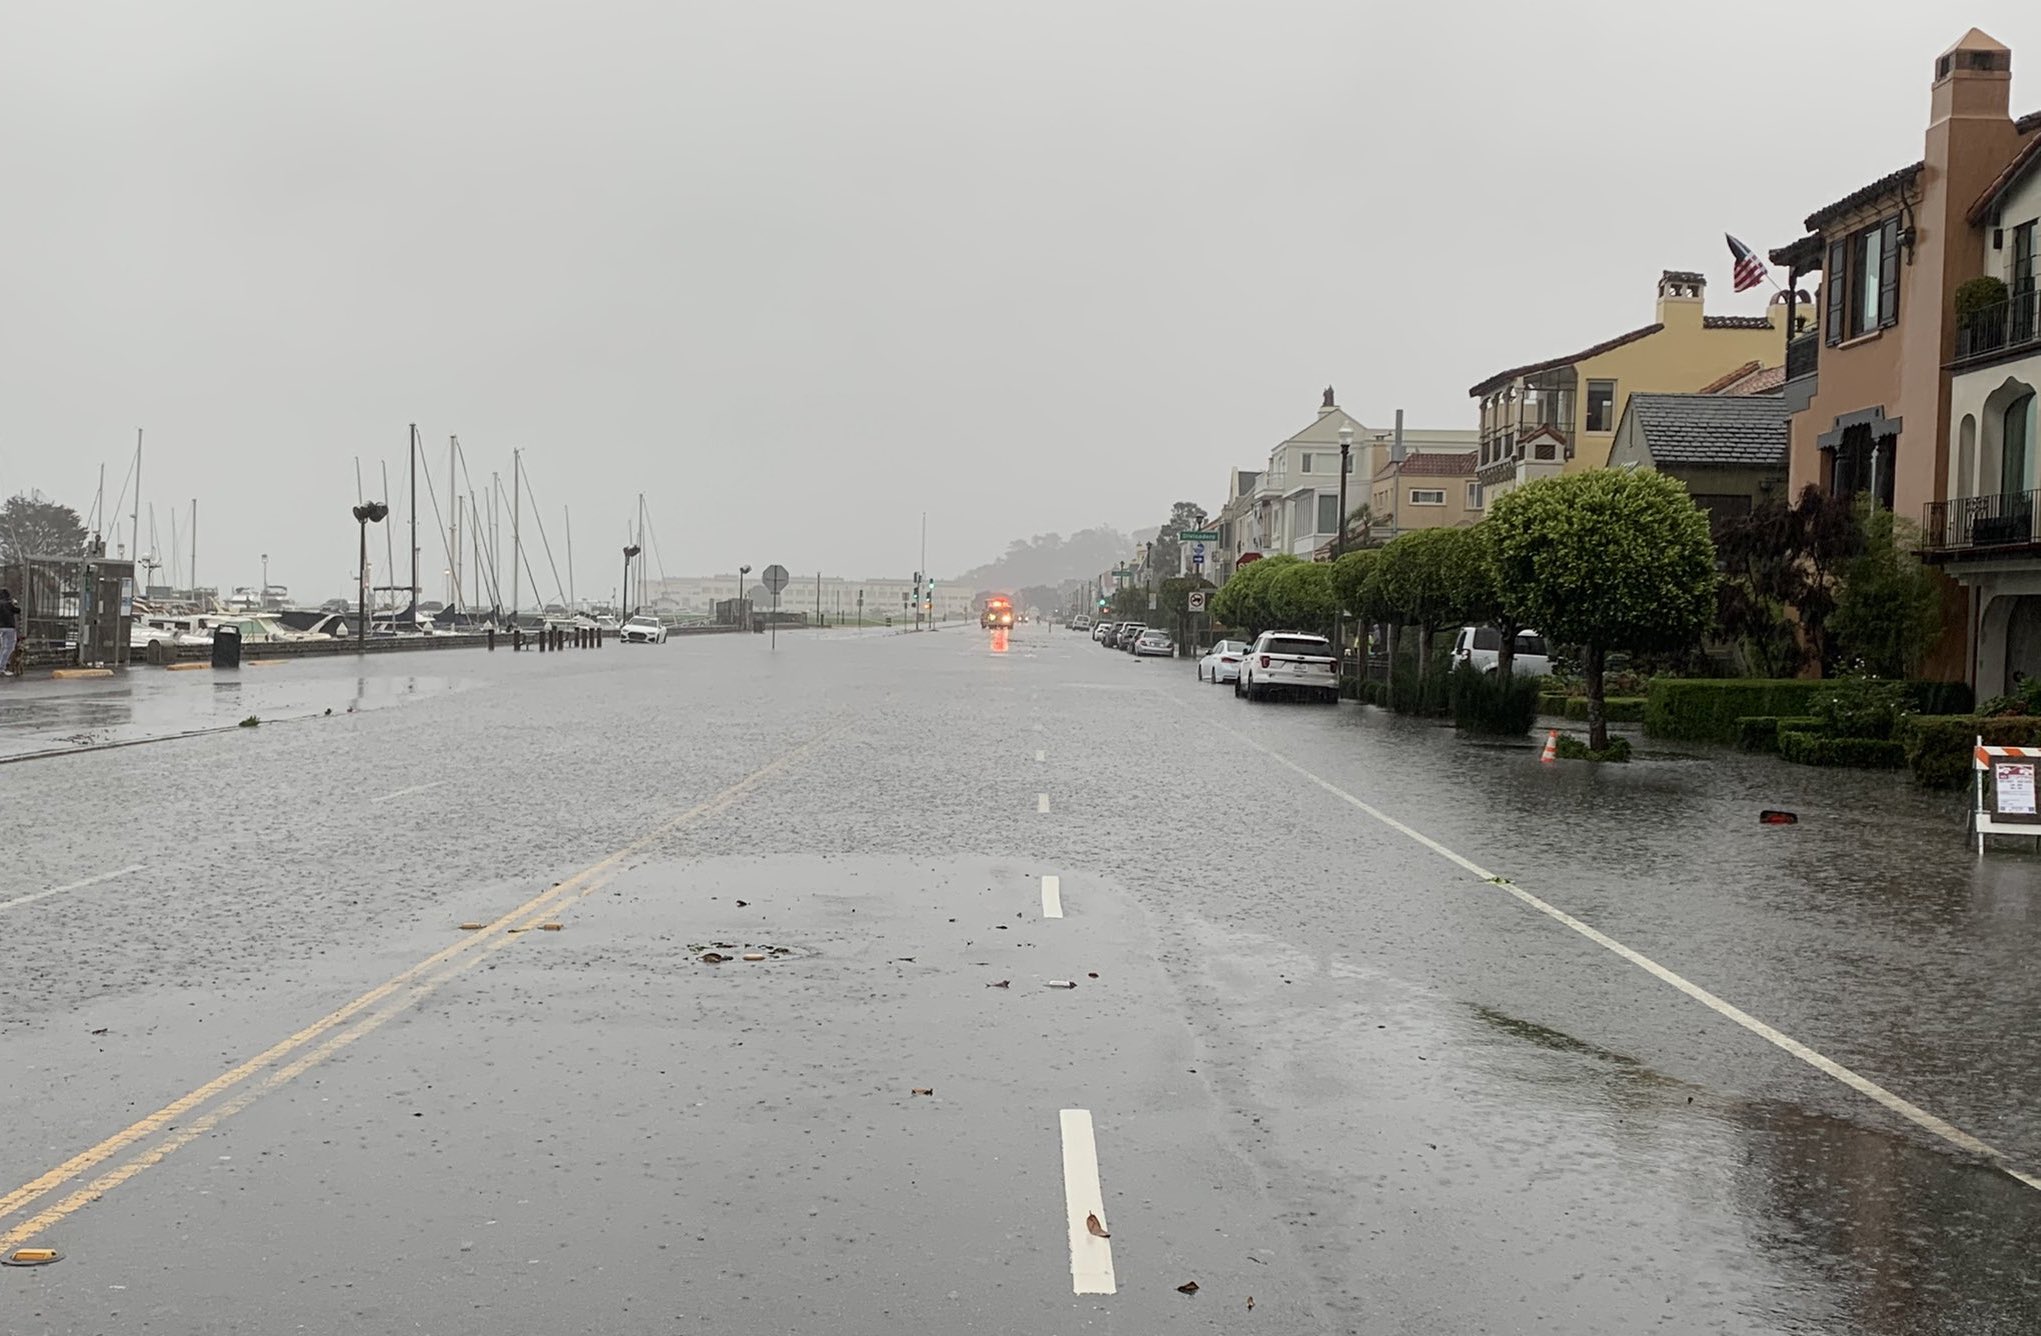 Marina Boulevard experienced severe flooding in October 2021.